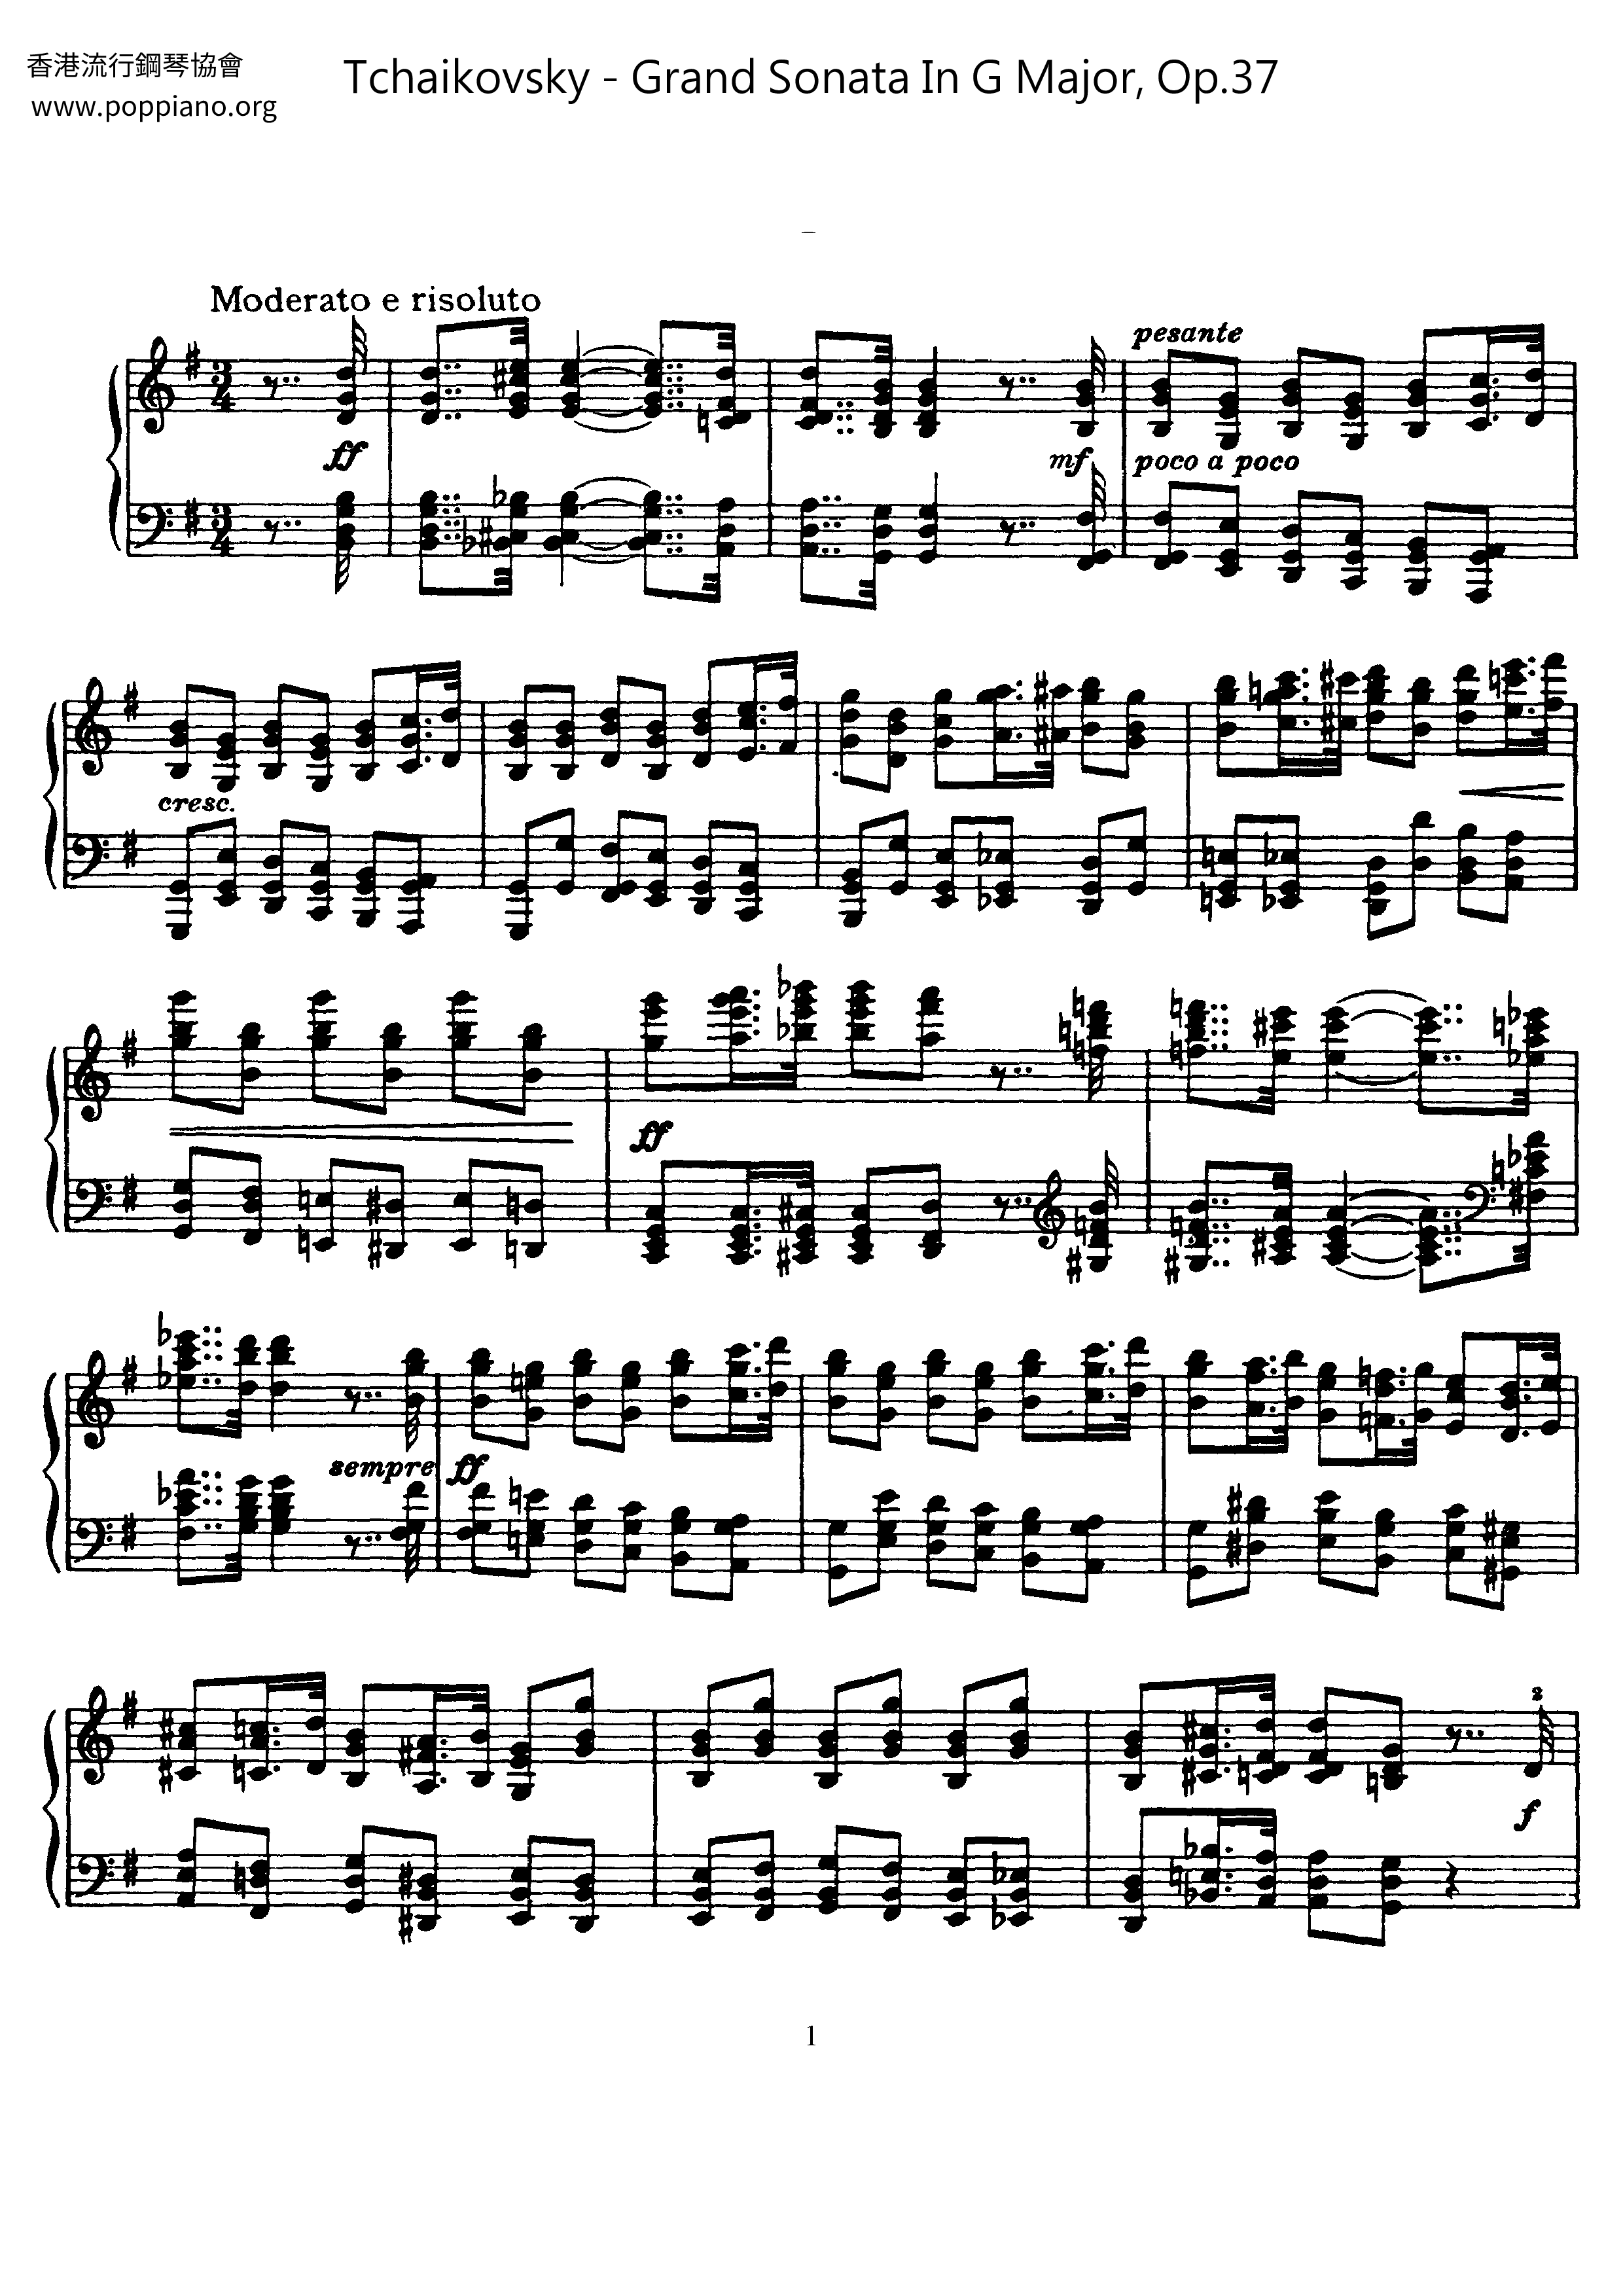 Grand Sonata in G Major, Op.37ピアノ譜